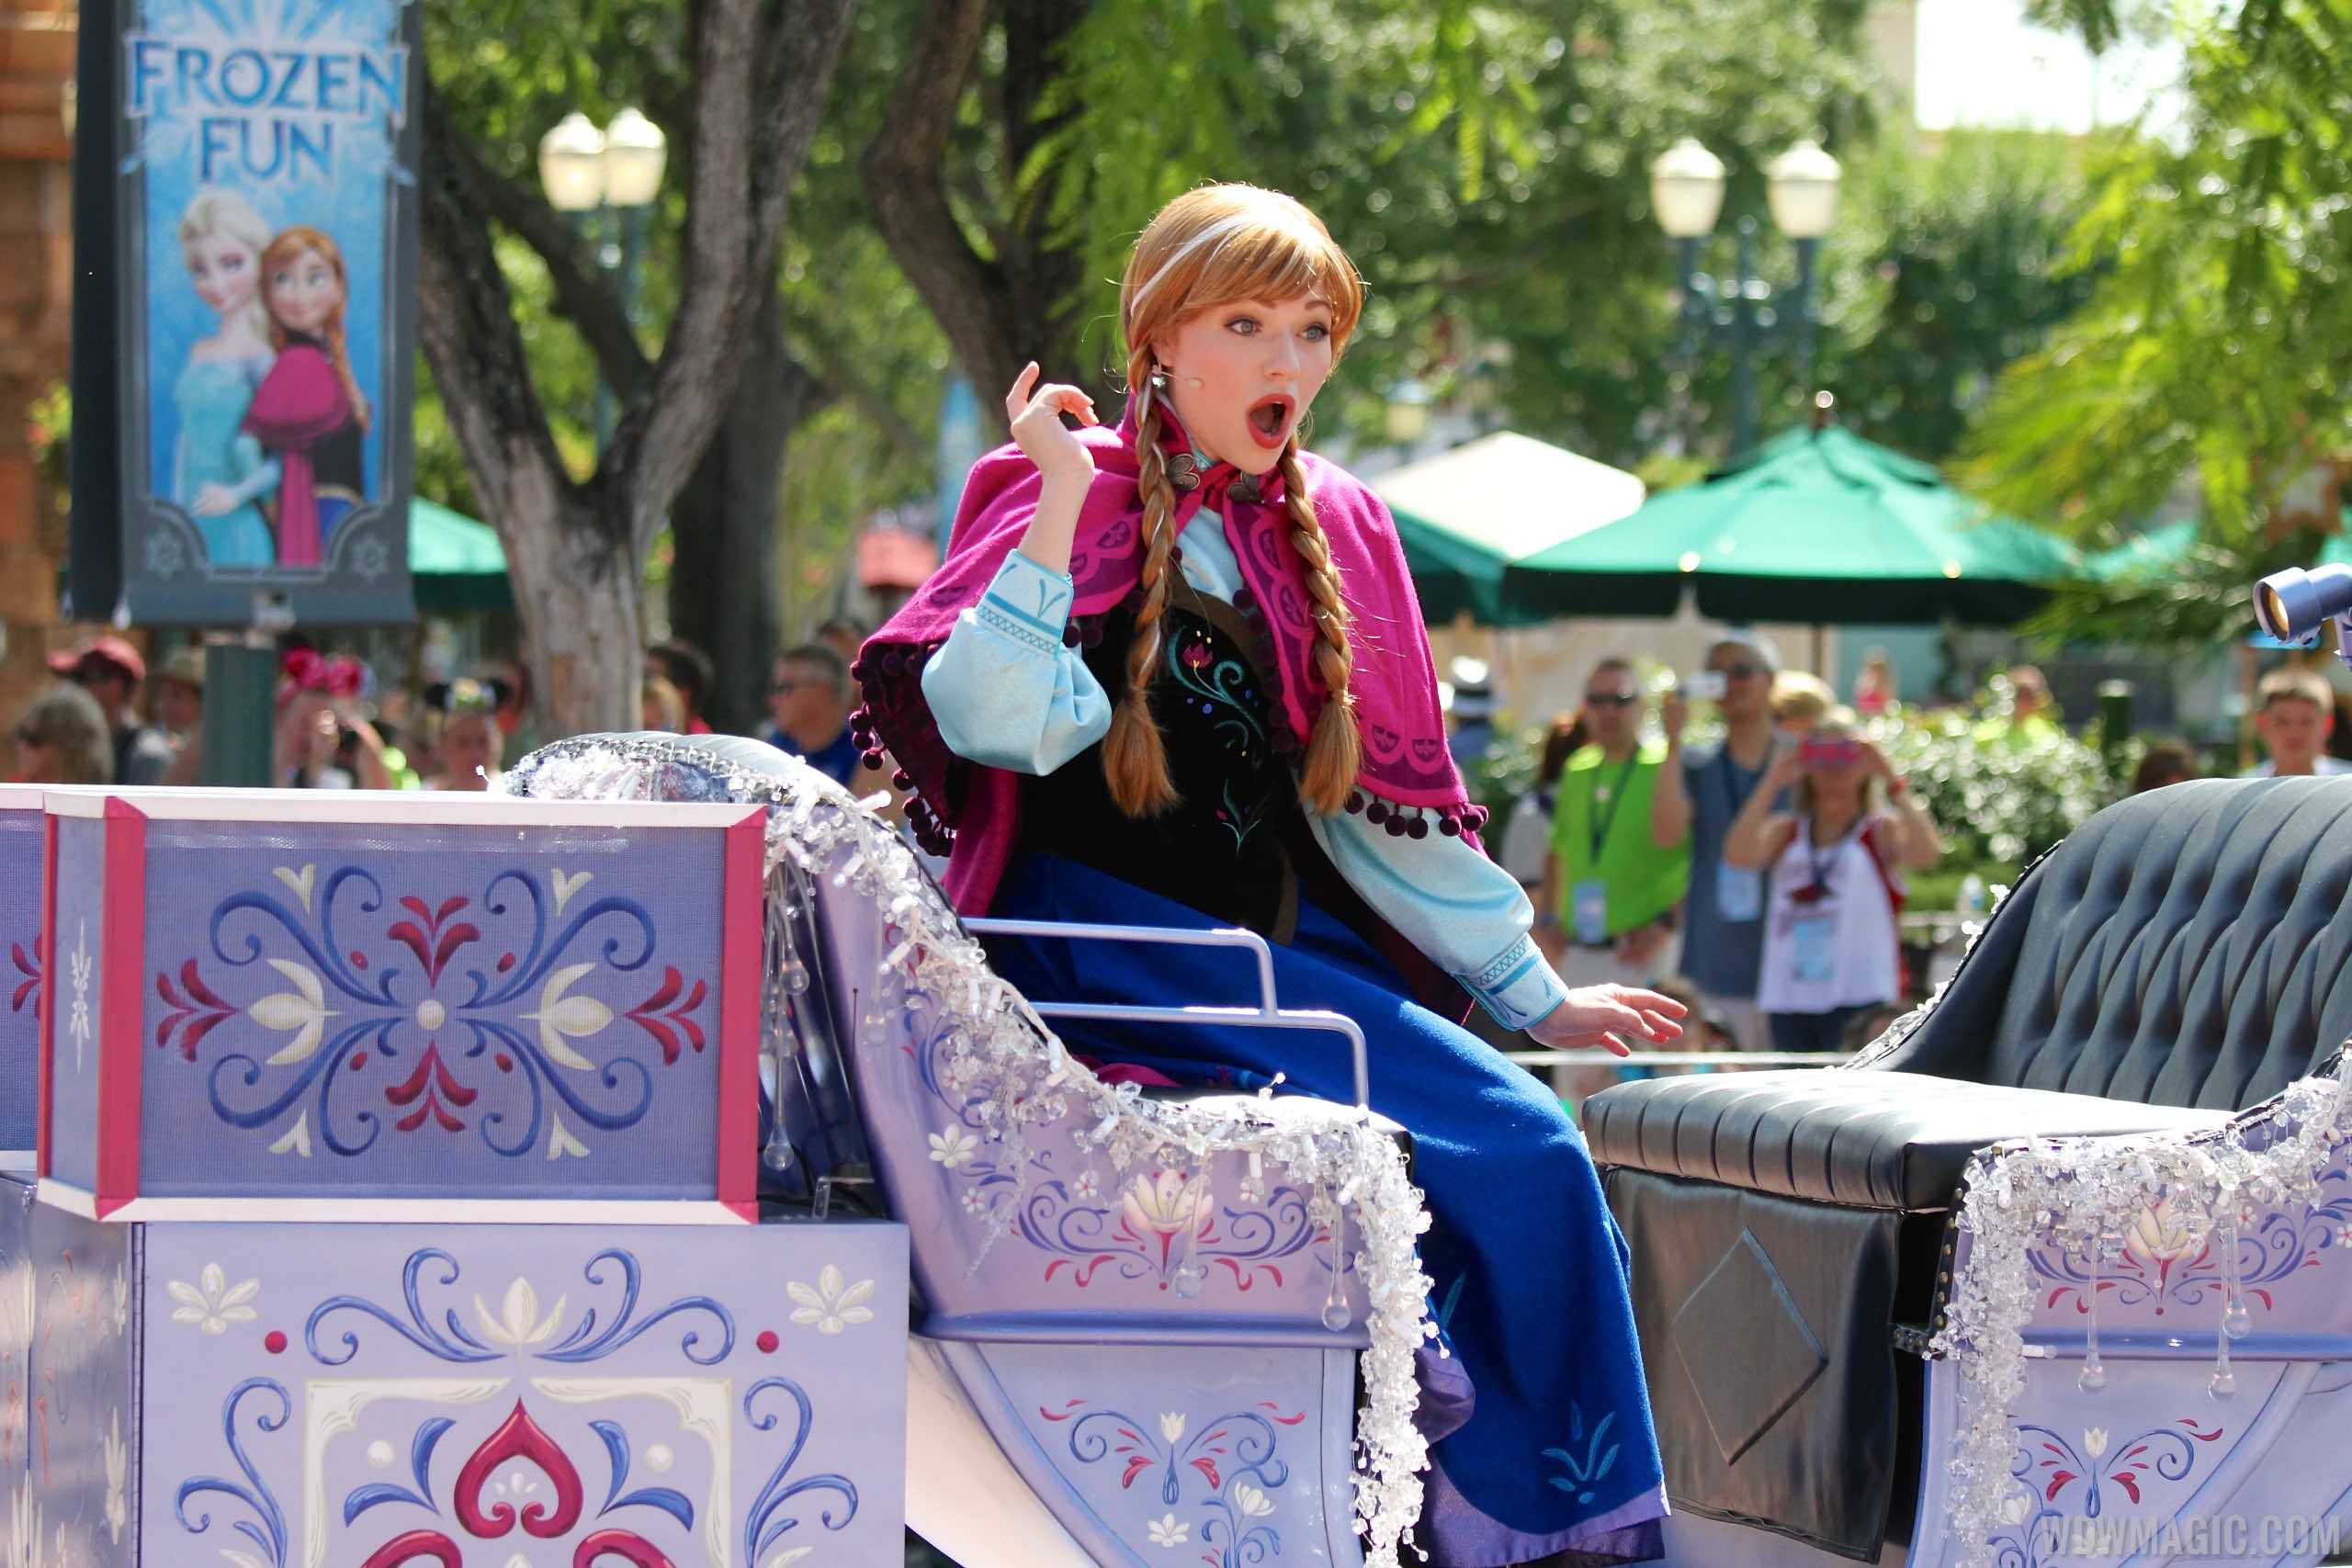 Frozen Royal Welcome 2015 - Princess Anna carriage